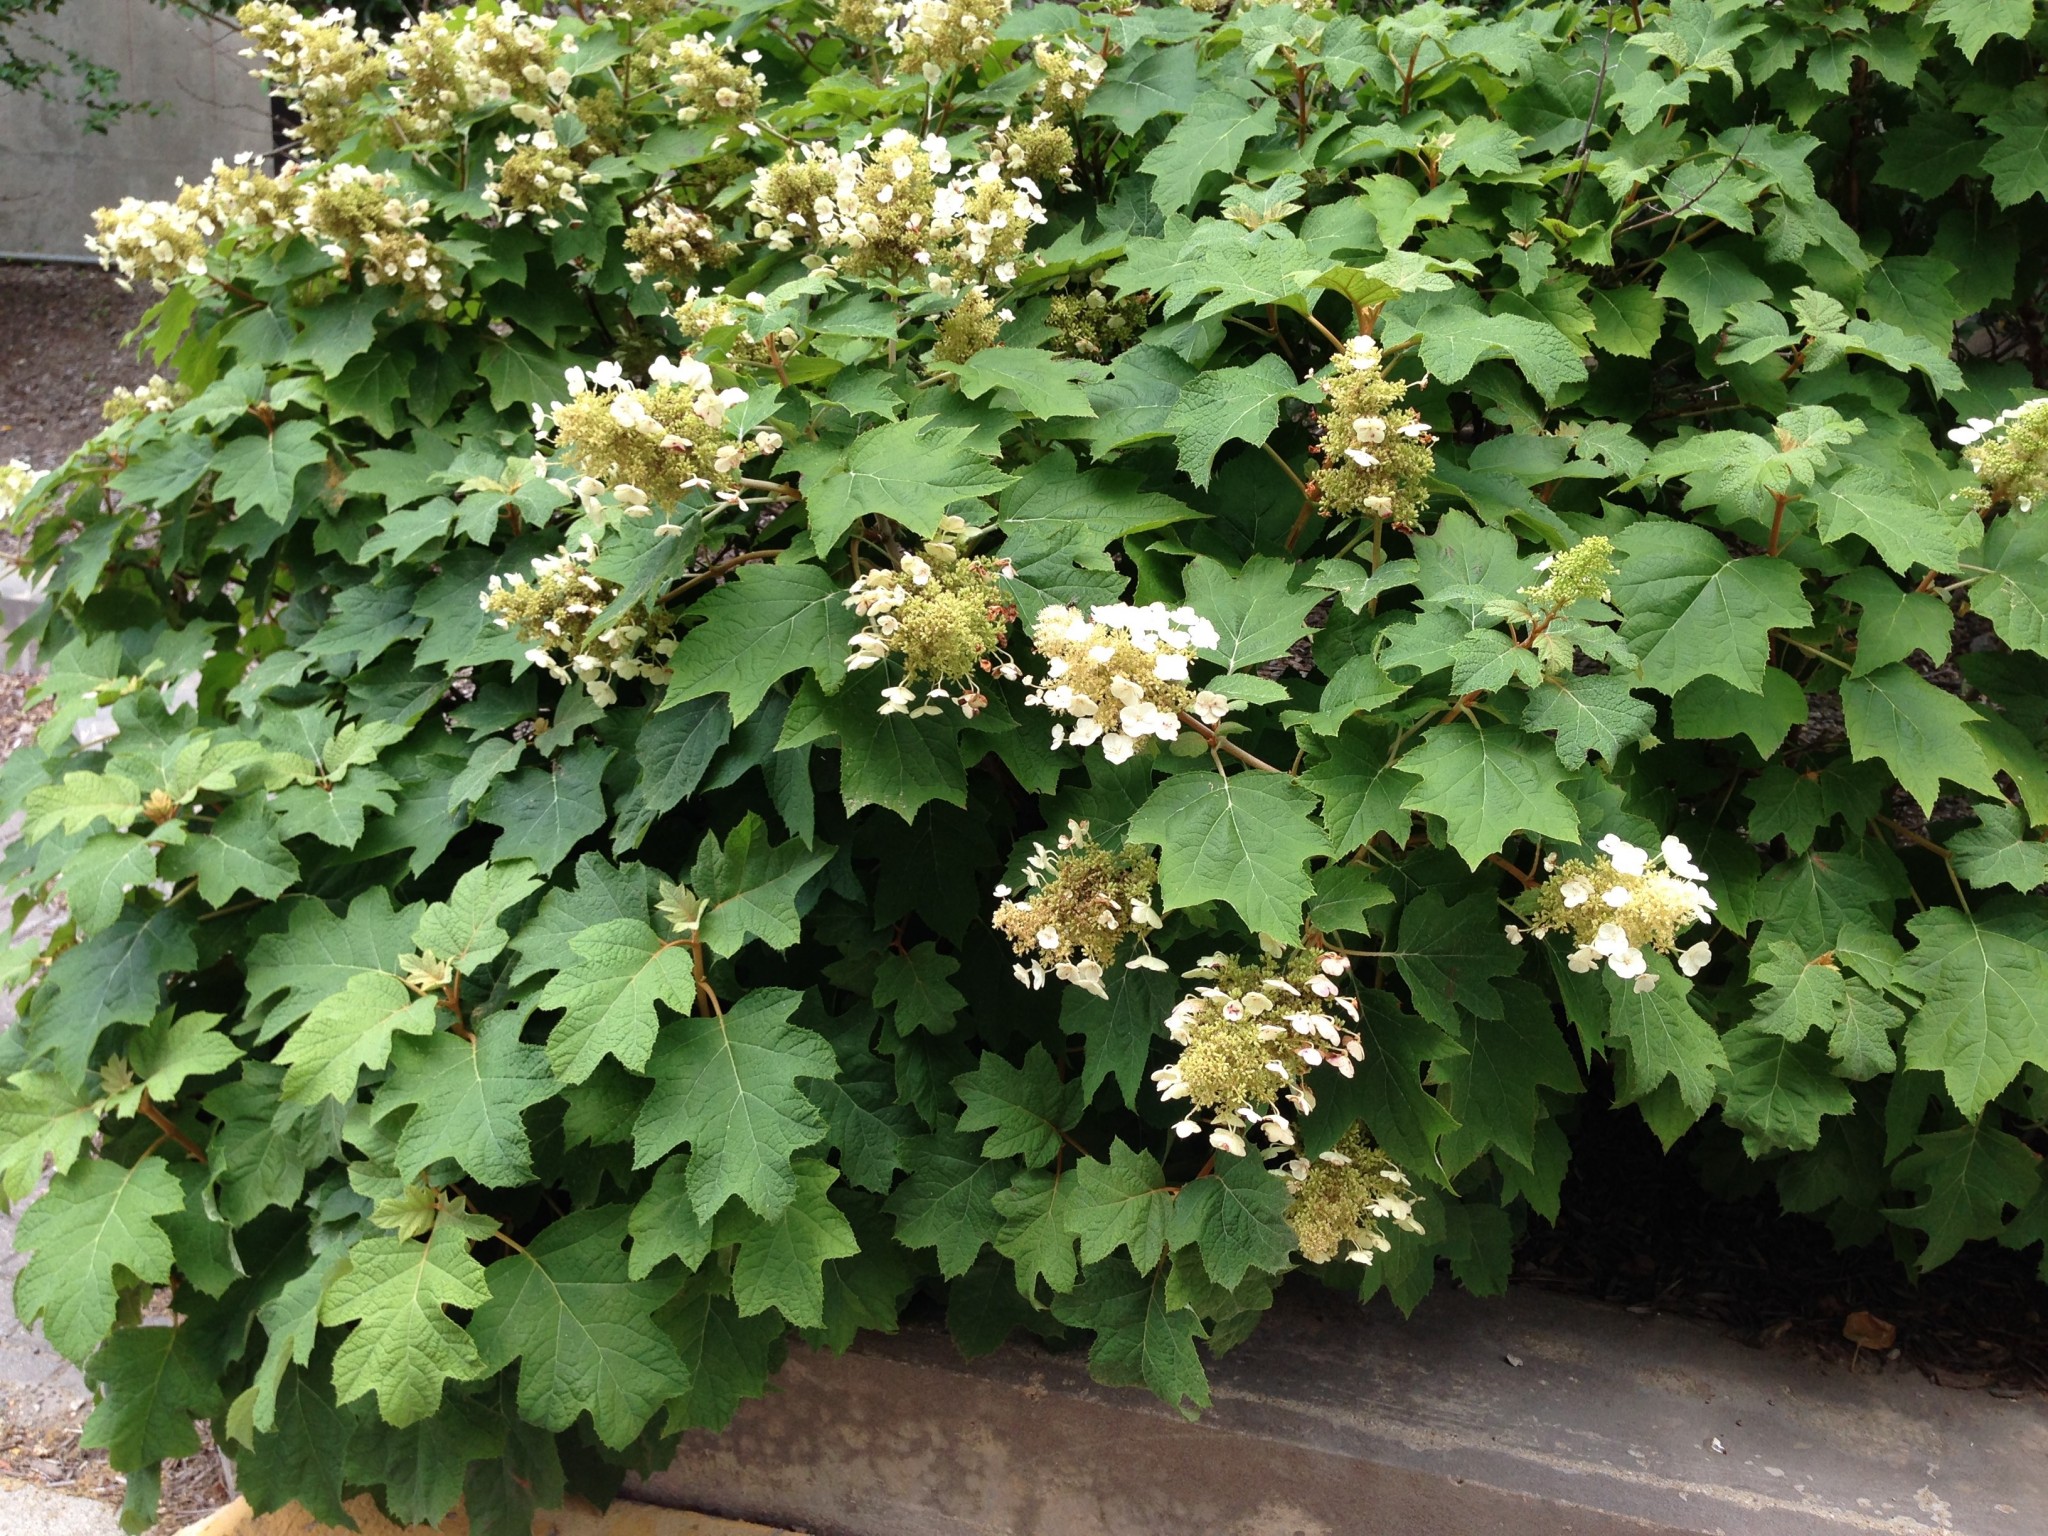 hydrangea purdue oakleaf confusing popular but rosie lerner extension credit indiana sites